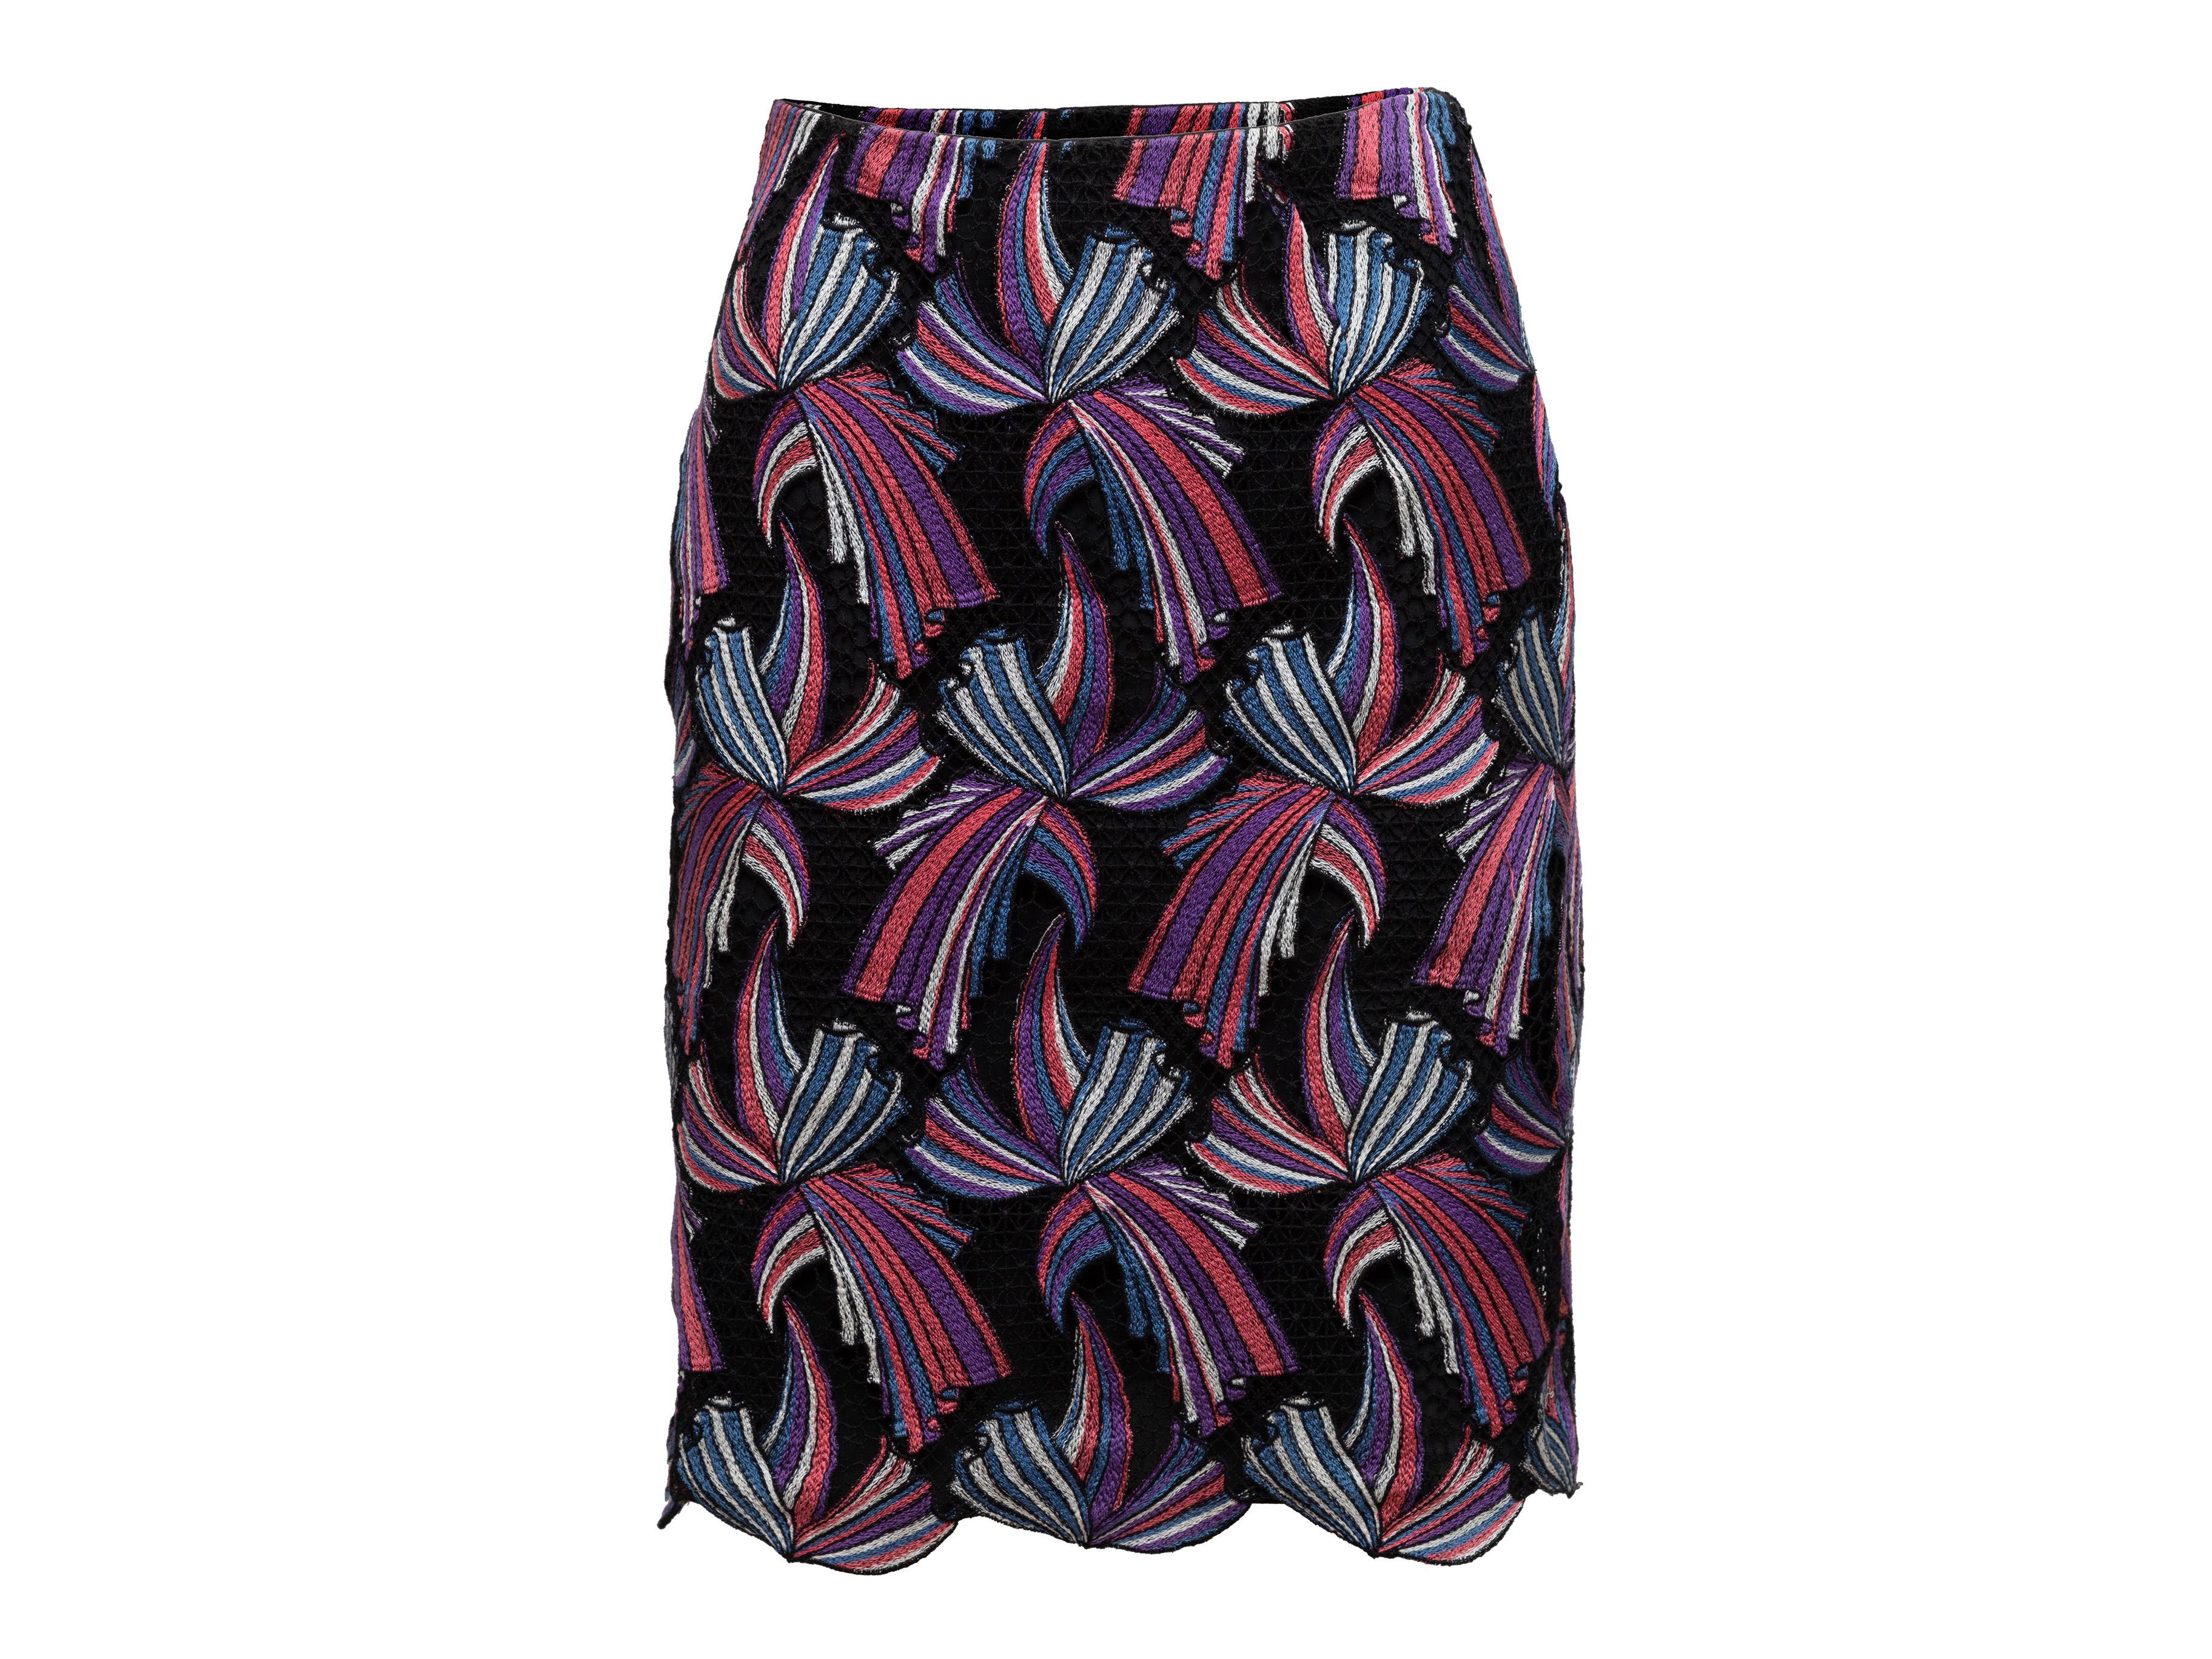 Women's Emilio Pucci Black & Multicolor Embroidered Skirt